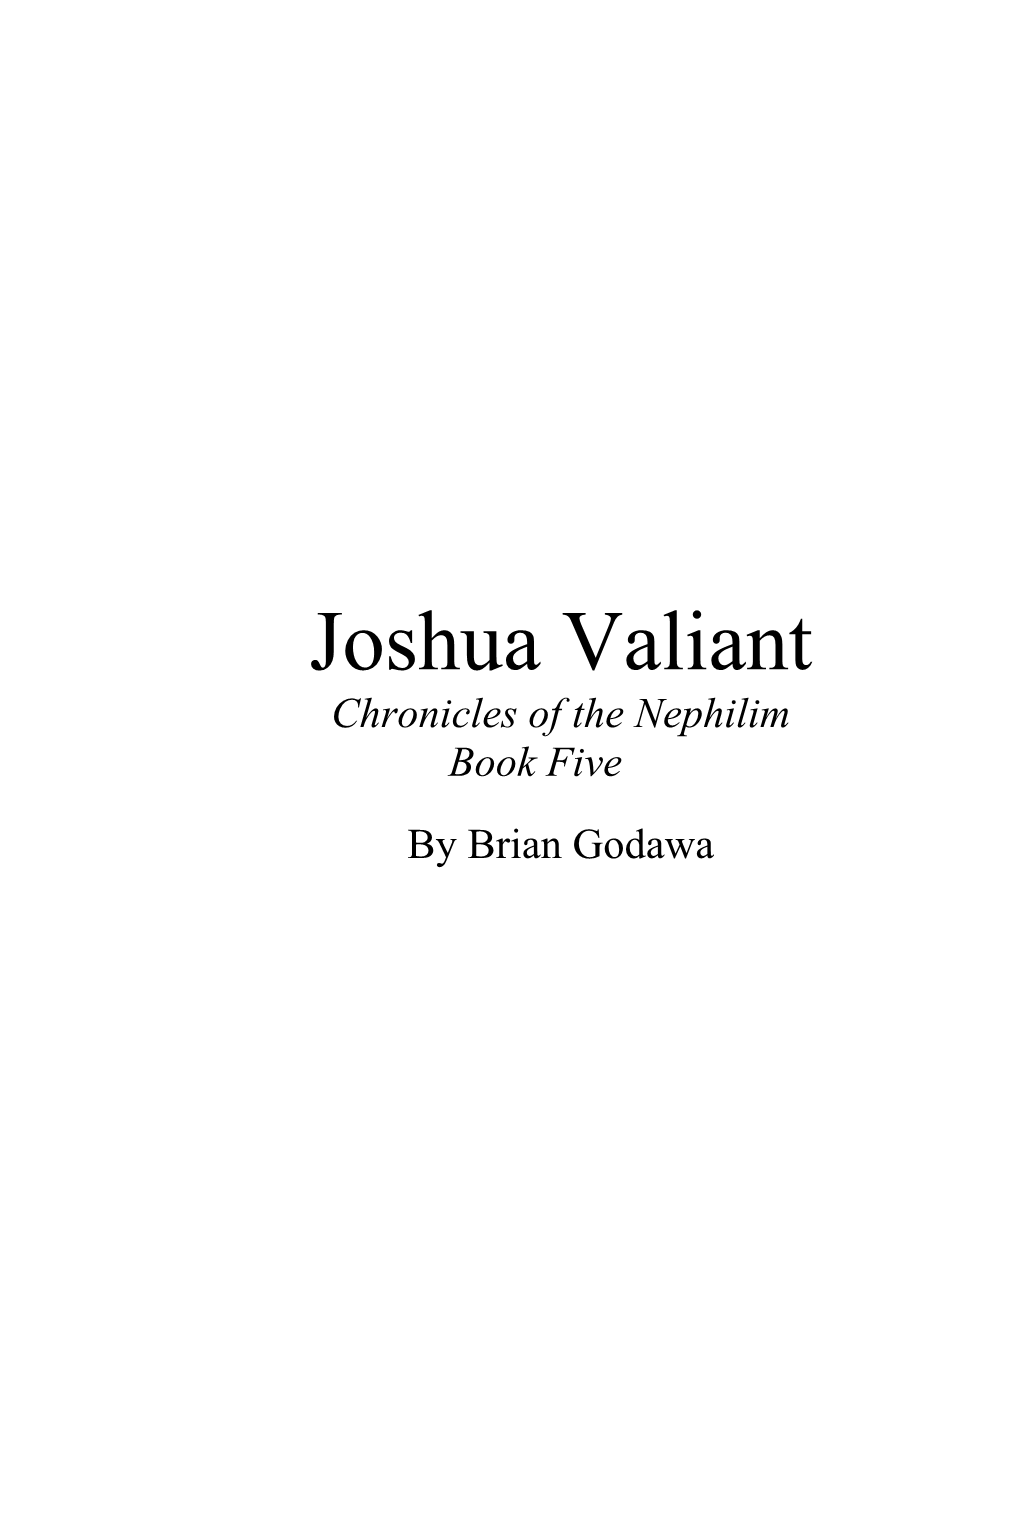 Joshua Valiant Chronicles of the Nephilim Book Five by Brian Godawa